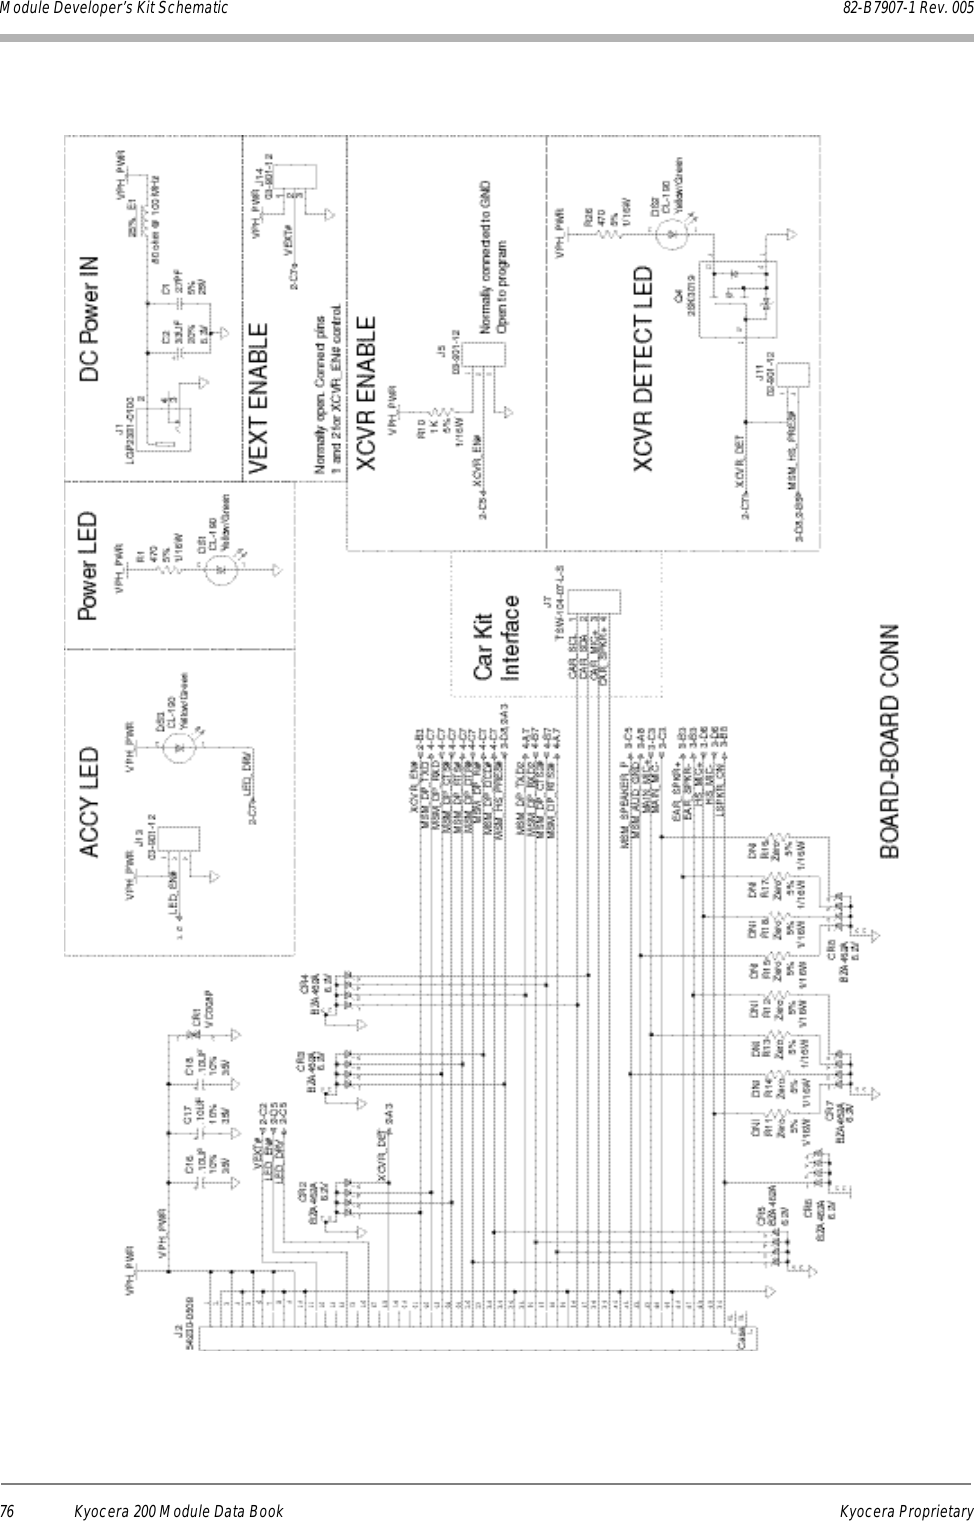 76 Kyocera 200 Module Data Book Kyocera ProprietaryModule Developer’s Kit Schematic 82-B7907-1 Rev. 005